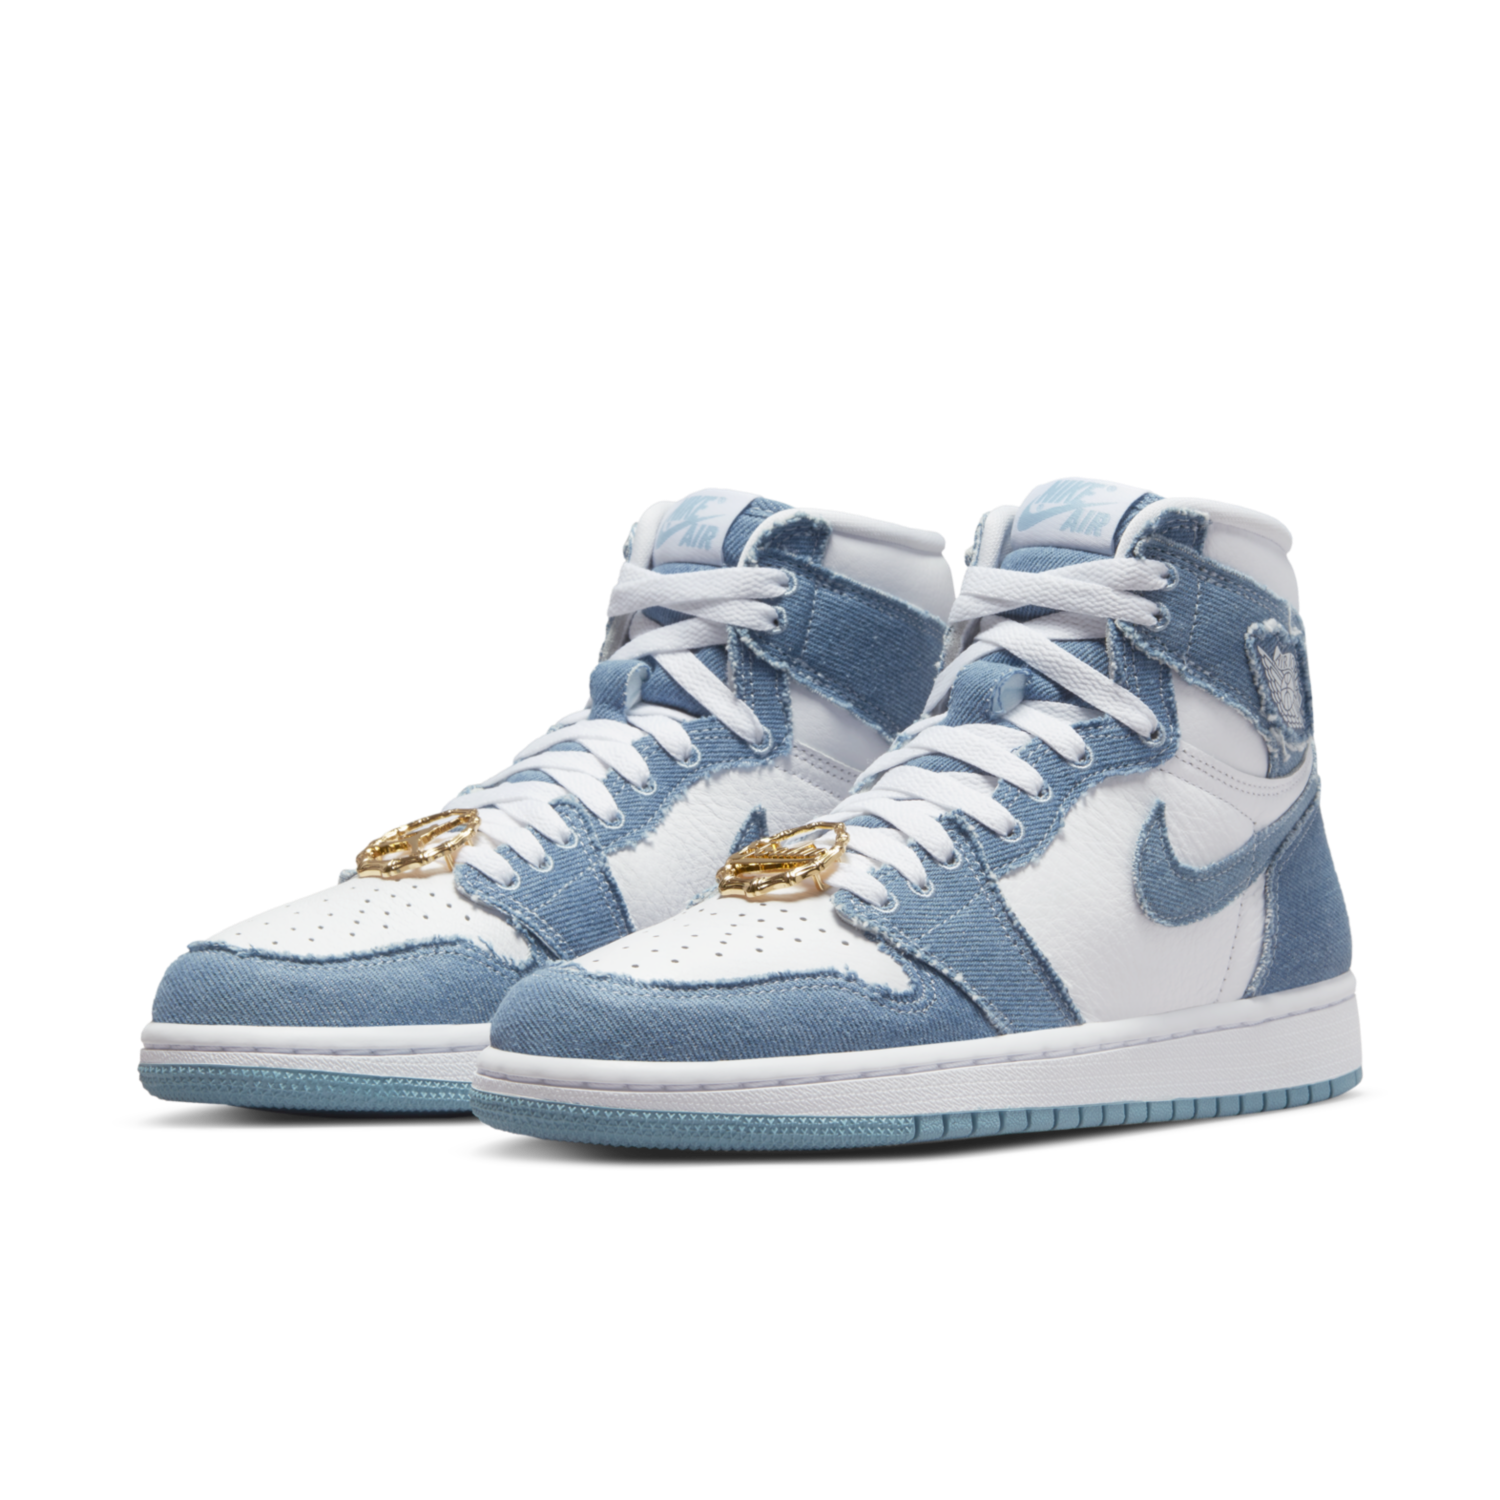 Air Jordan 1 High OG 'Denim' most wanted sneaker releases